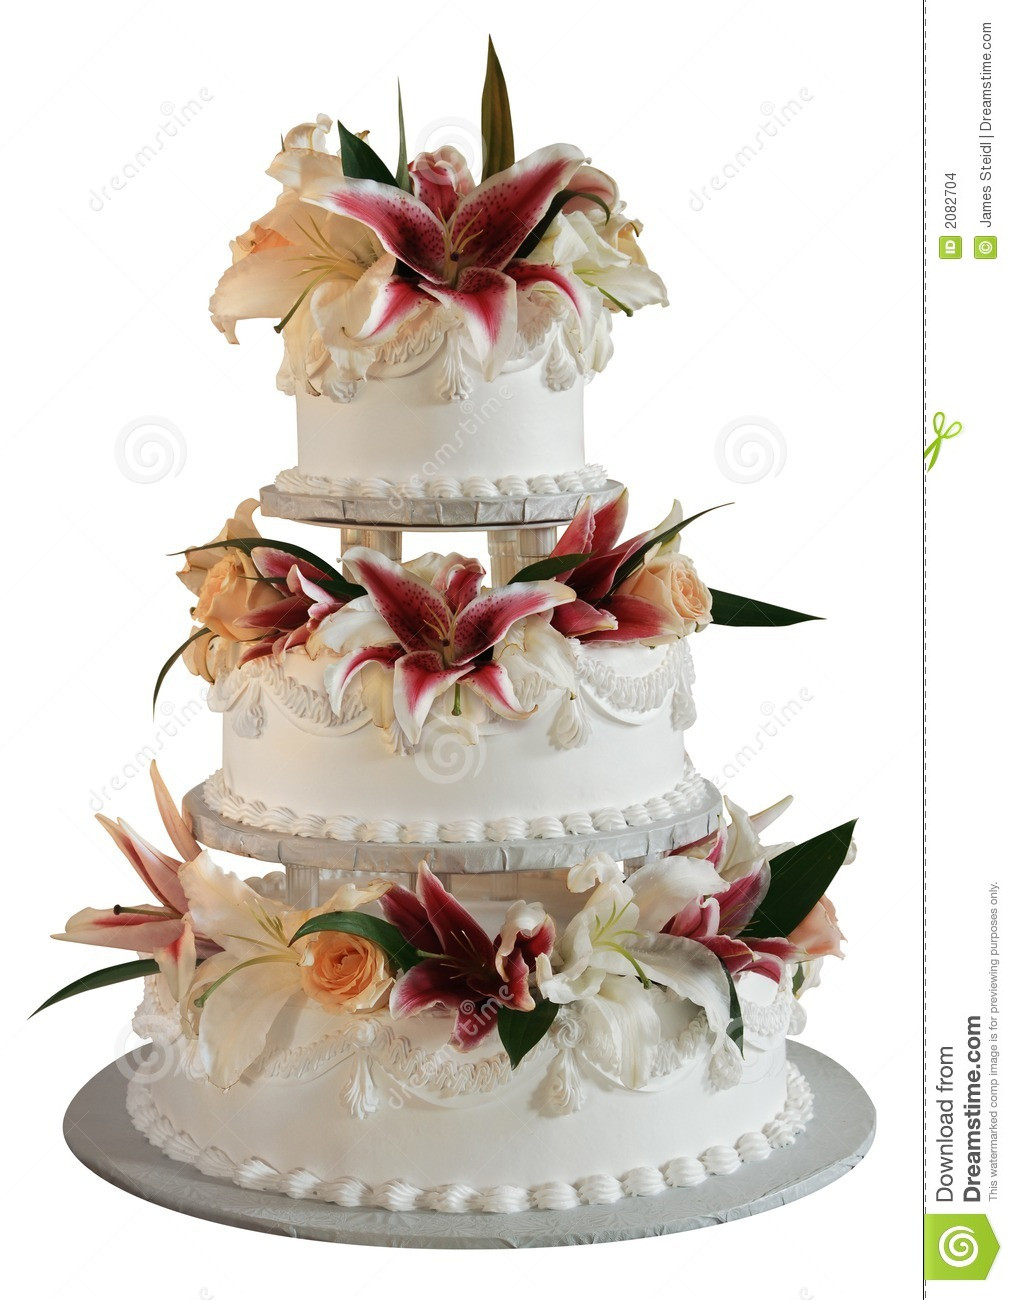 6 Layer Wedding Cakes
 3 layered wedding cake idea in 2017